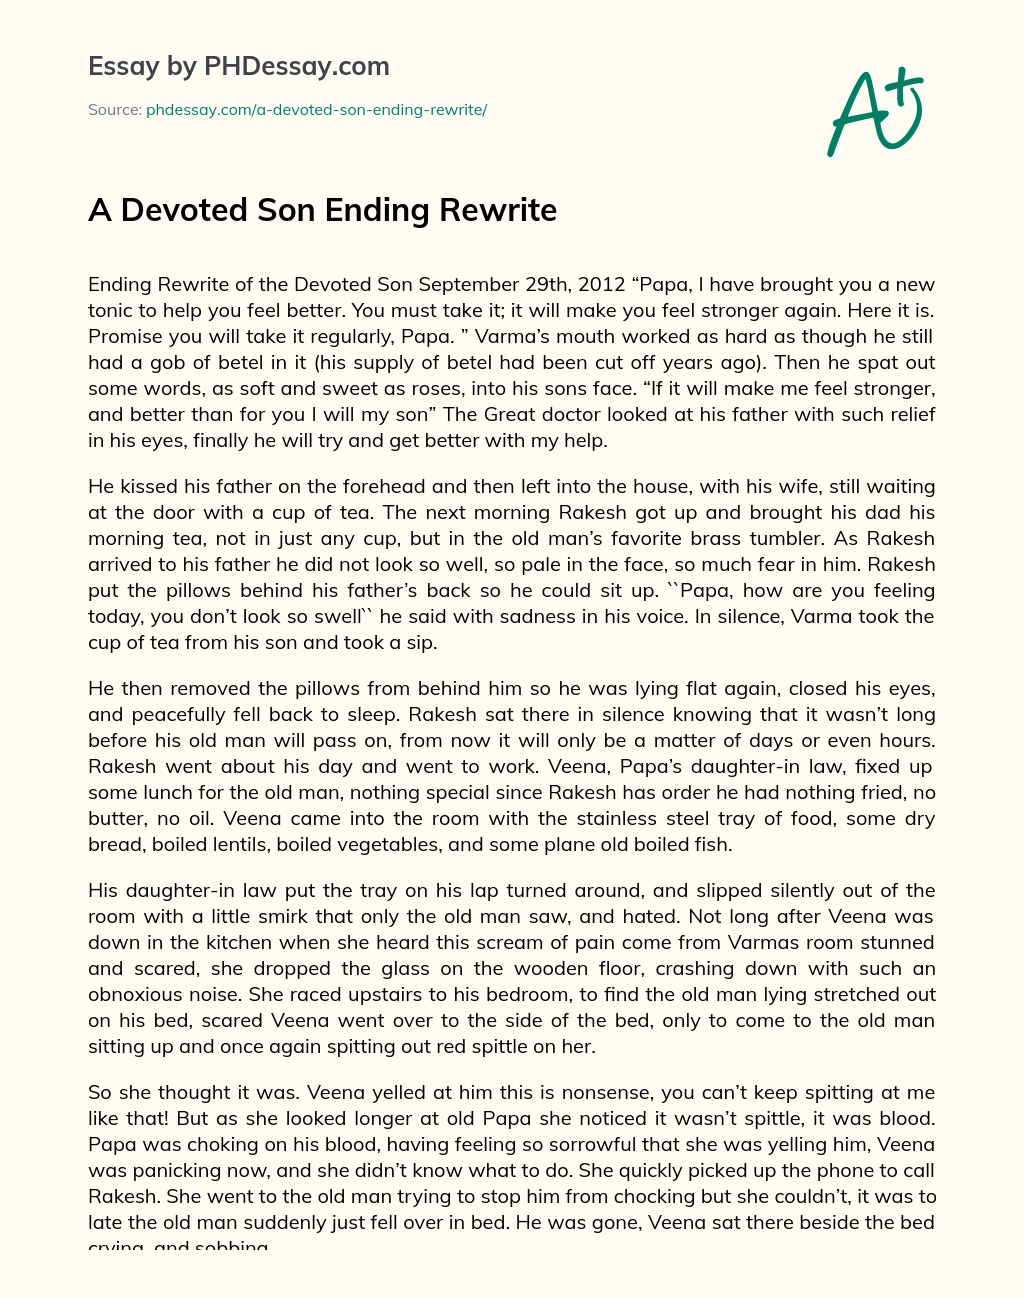 A Devoted Son Ending Rewrite essay